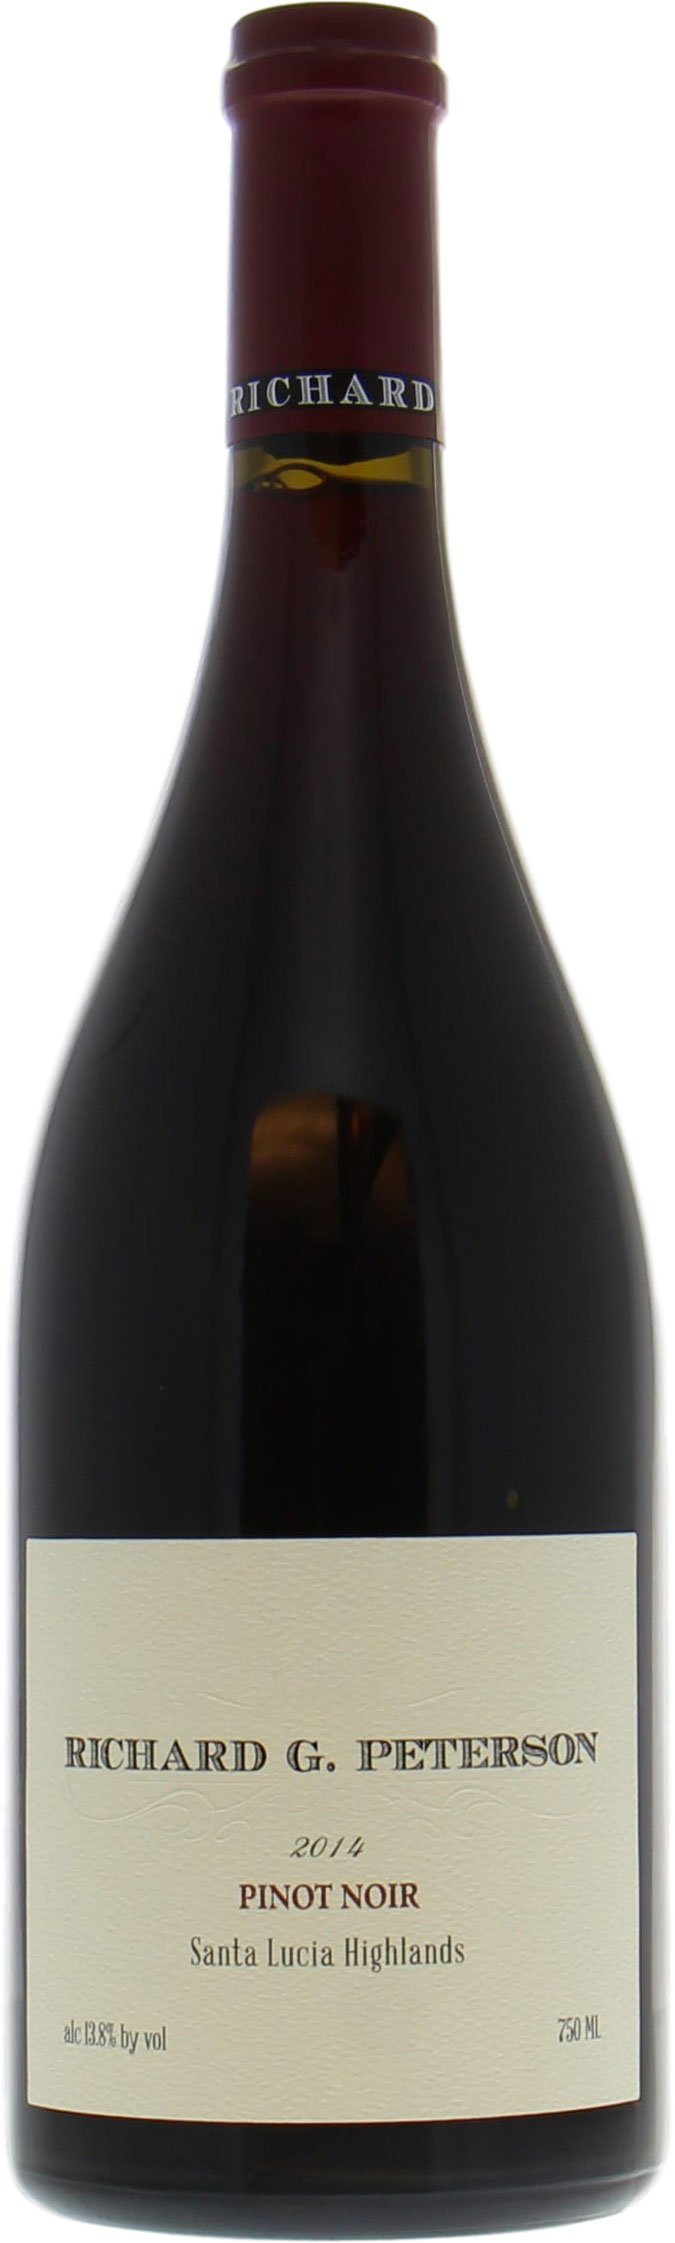 Amuse Bouche Richard G, Peterson - Pinot Noir Santa Lucia Highlands 2013 Perfect